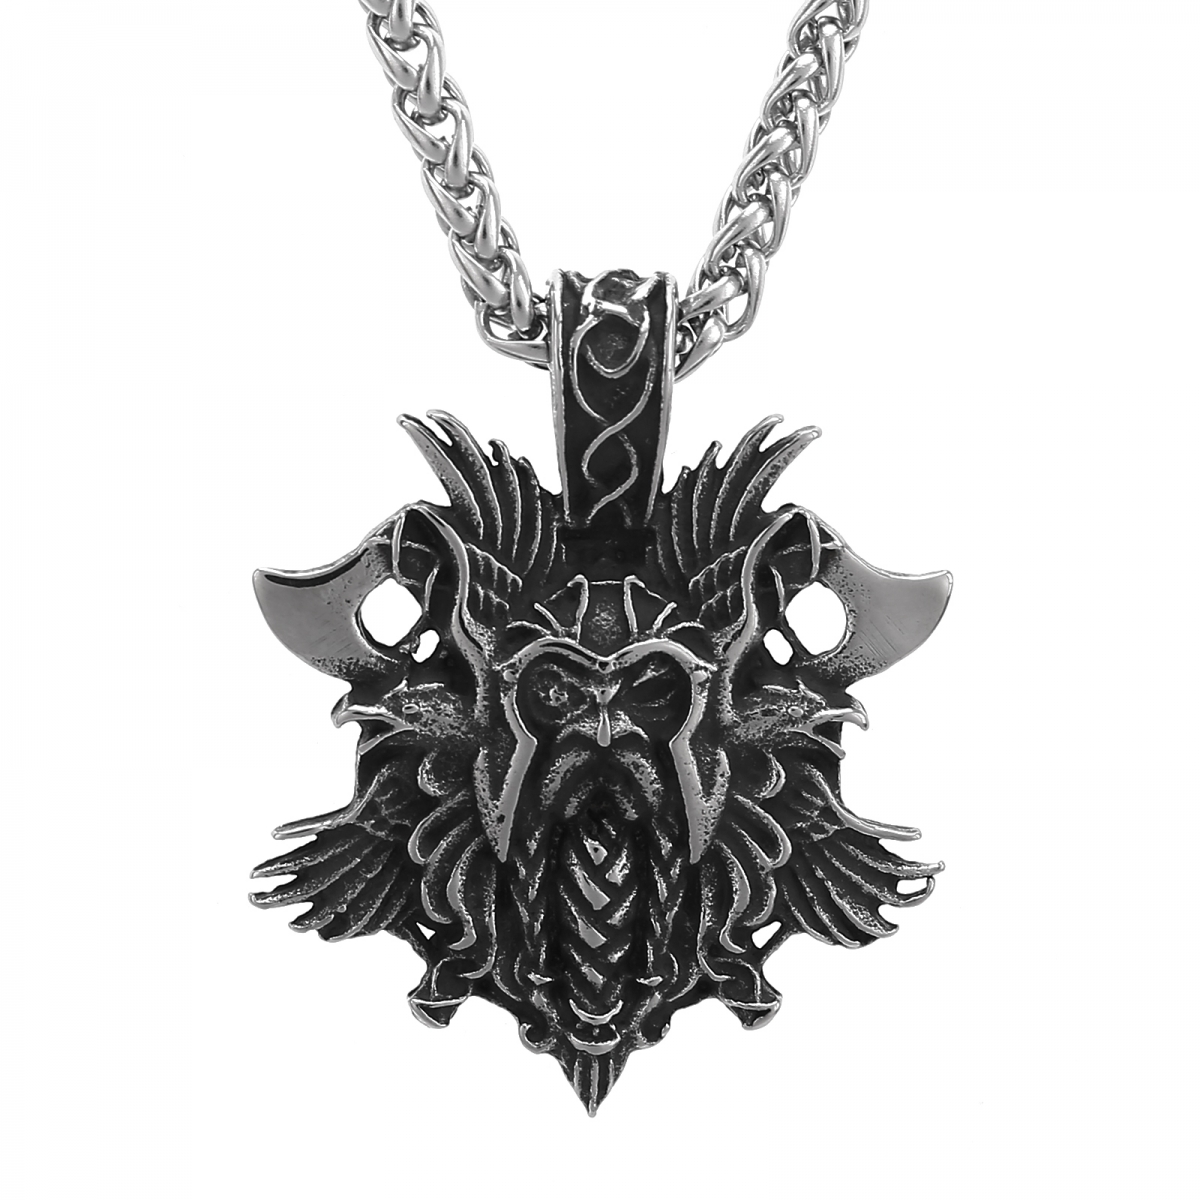 Odin Necklace US$3.2/PC-NORSECOLLECTION- Viking Jewelry,Viking Necklace,Viking Bracelet,Viking Rings,Viking Mugs,Viking Accessories,Viking Crafts